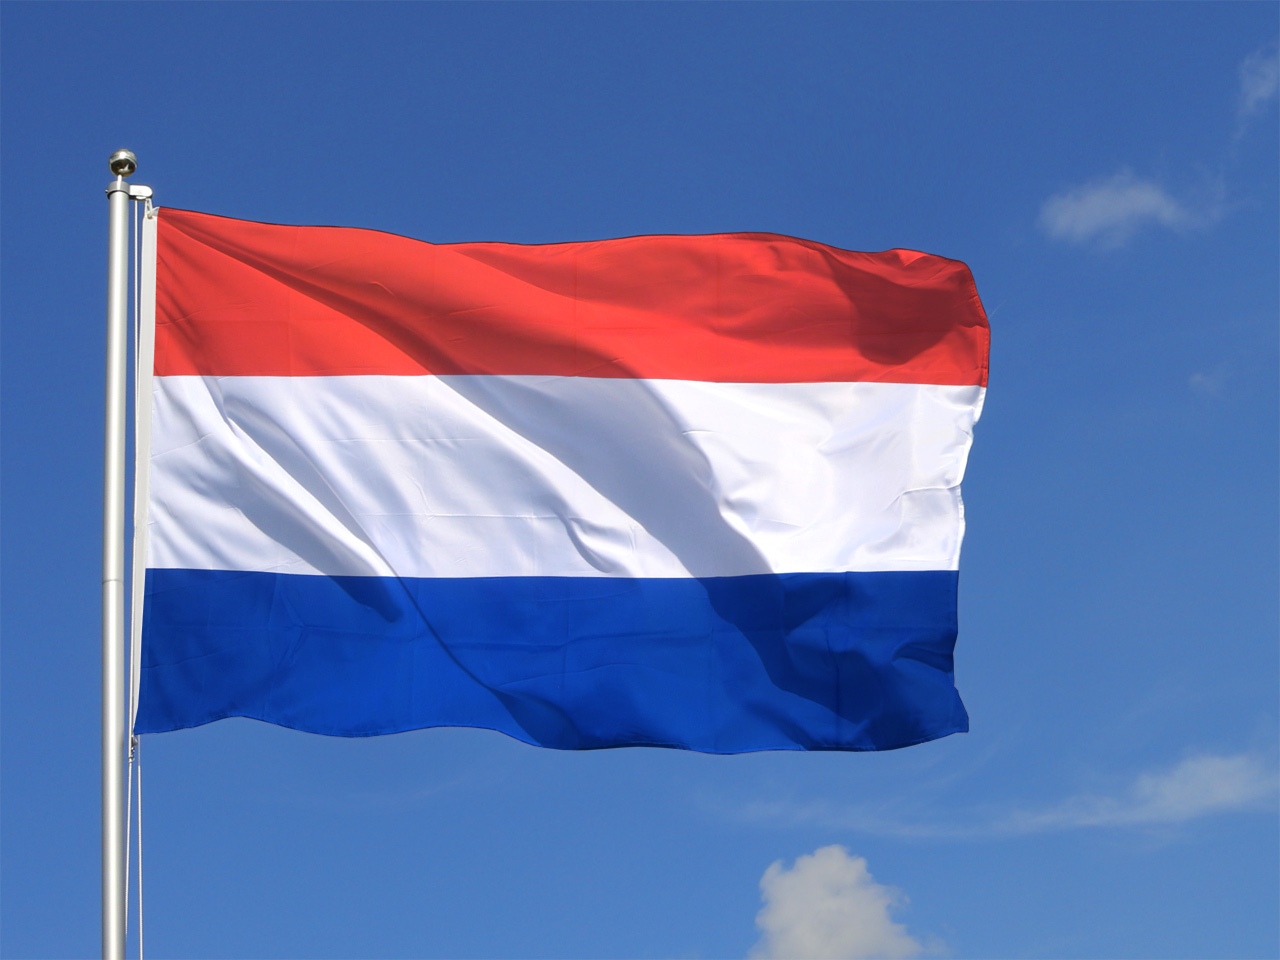 Как выглядит флаг картинка. Флаг Нидерландов. Флаг Нидерландов флаг Нидерландов. Флаг Голландии фото. Флаг Нидерландов 1914.